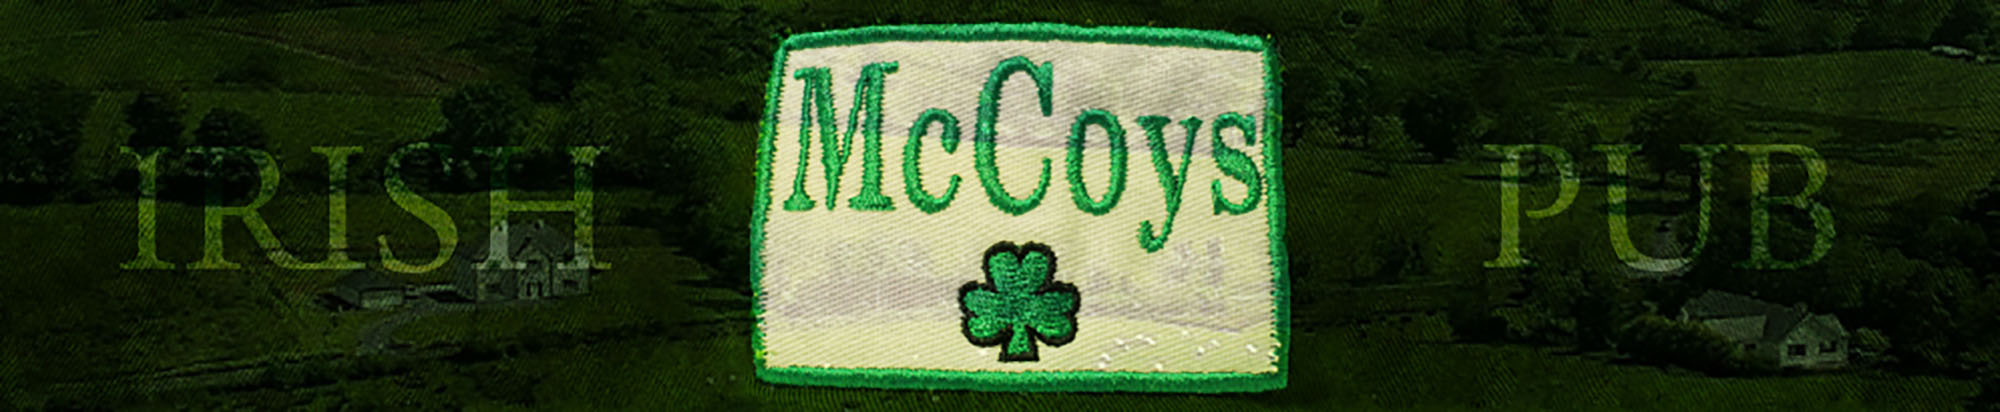 McCoys Pub